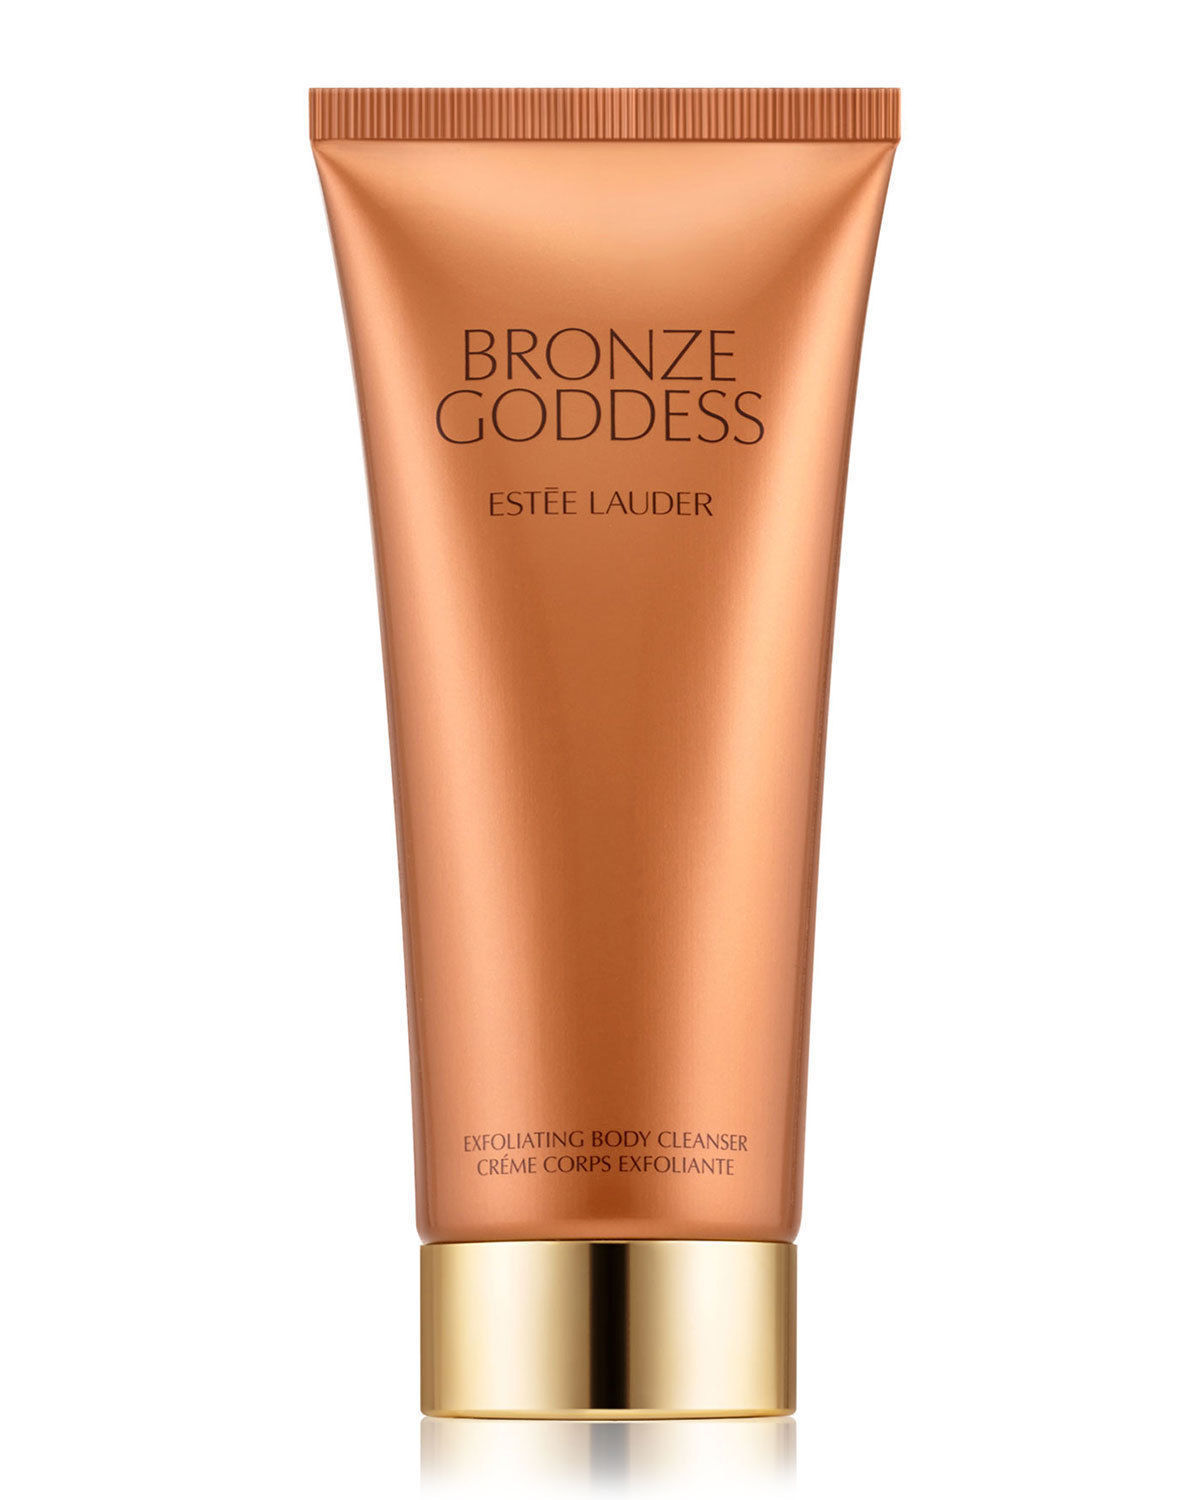 Estee Lauder BRONZE GODDESS Perfume EXFOLIATING Body Creme CLEANSER 6.7oz NIB - $39.50